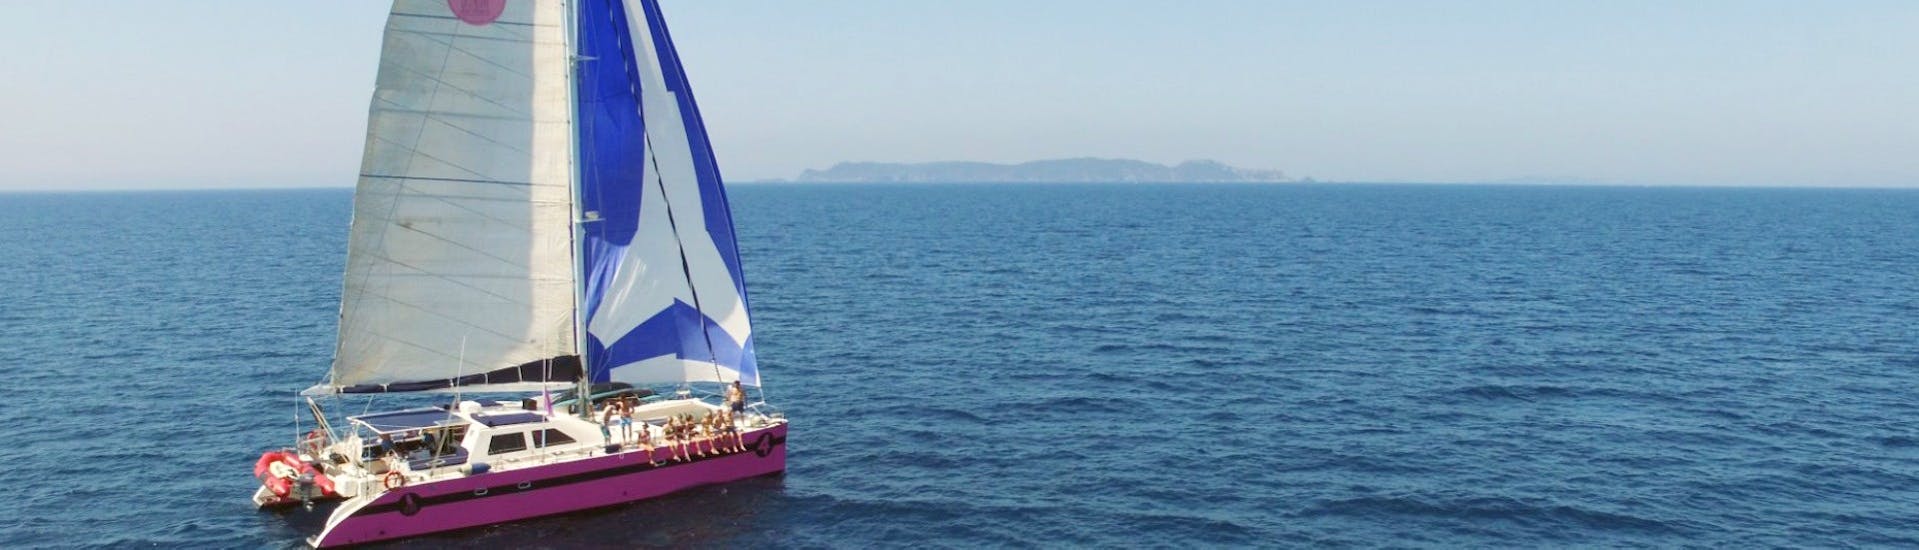 Vue lors de la Balade en catamaran dans les golfes de Saint-Tropez et Sainte Maxime avec Caseneuve Maxi Catamaran.